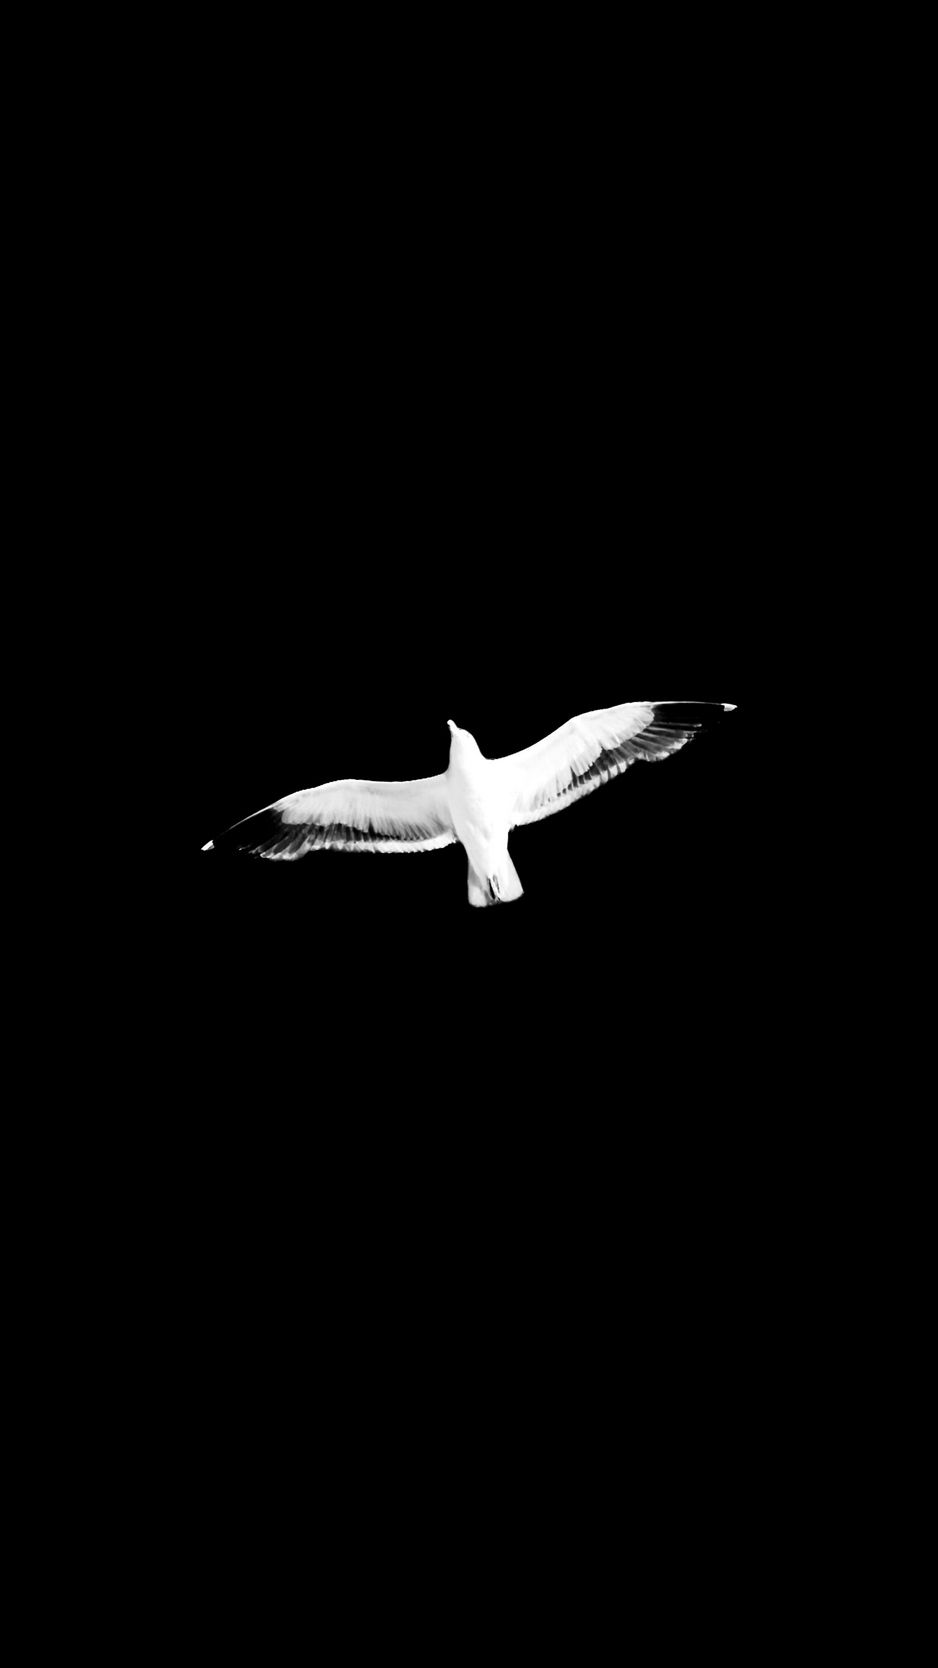 Download wallpaper 938x1668 bird, bw, flight, wings, sky